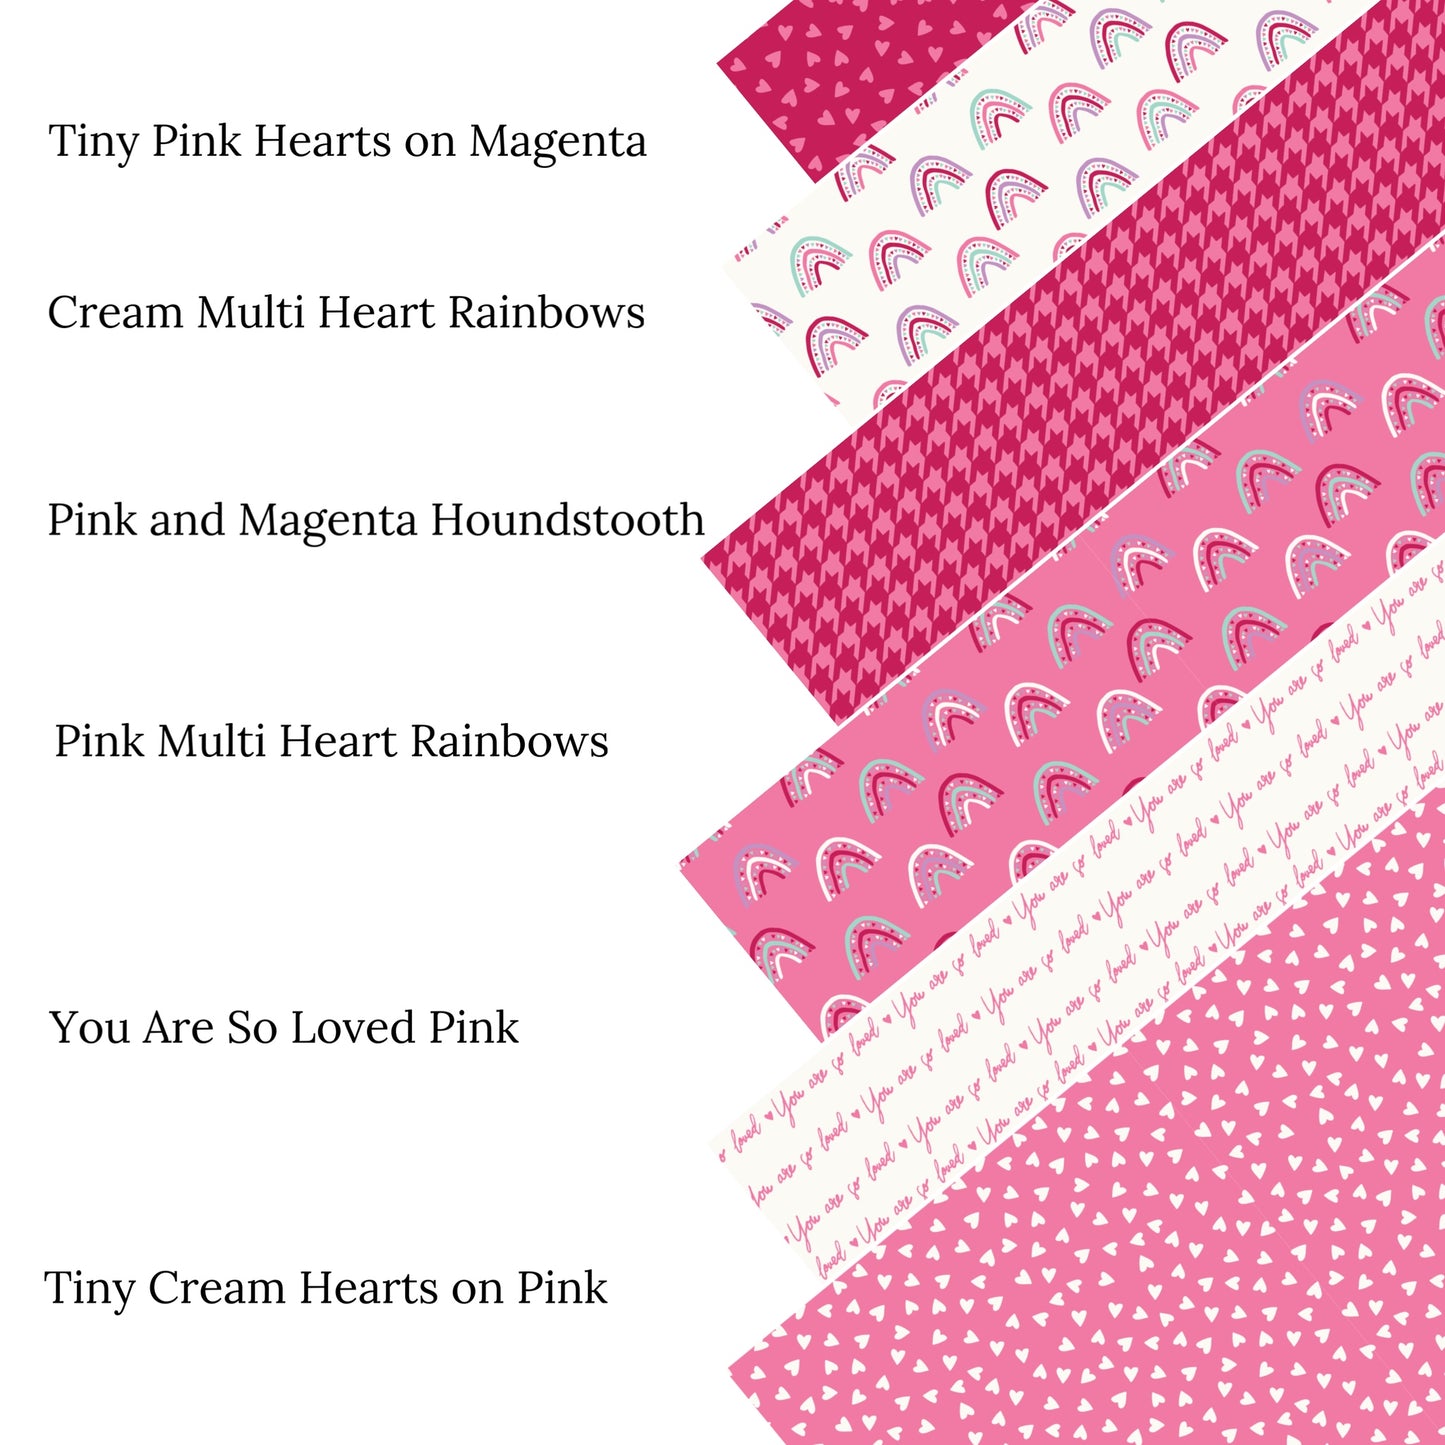 Cream Multi Heart Rainbows Faux Leather Sheets